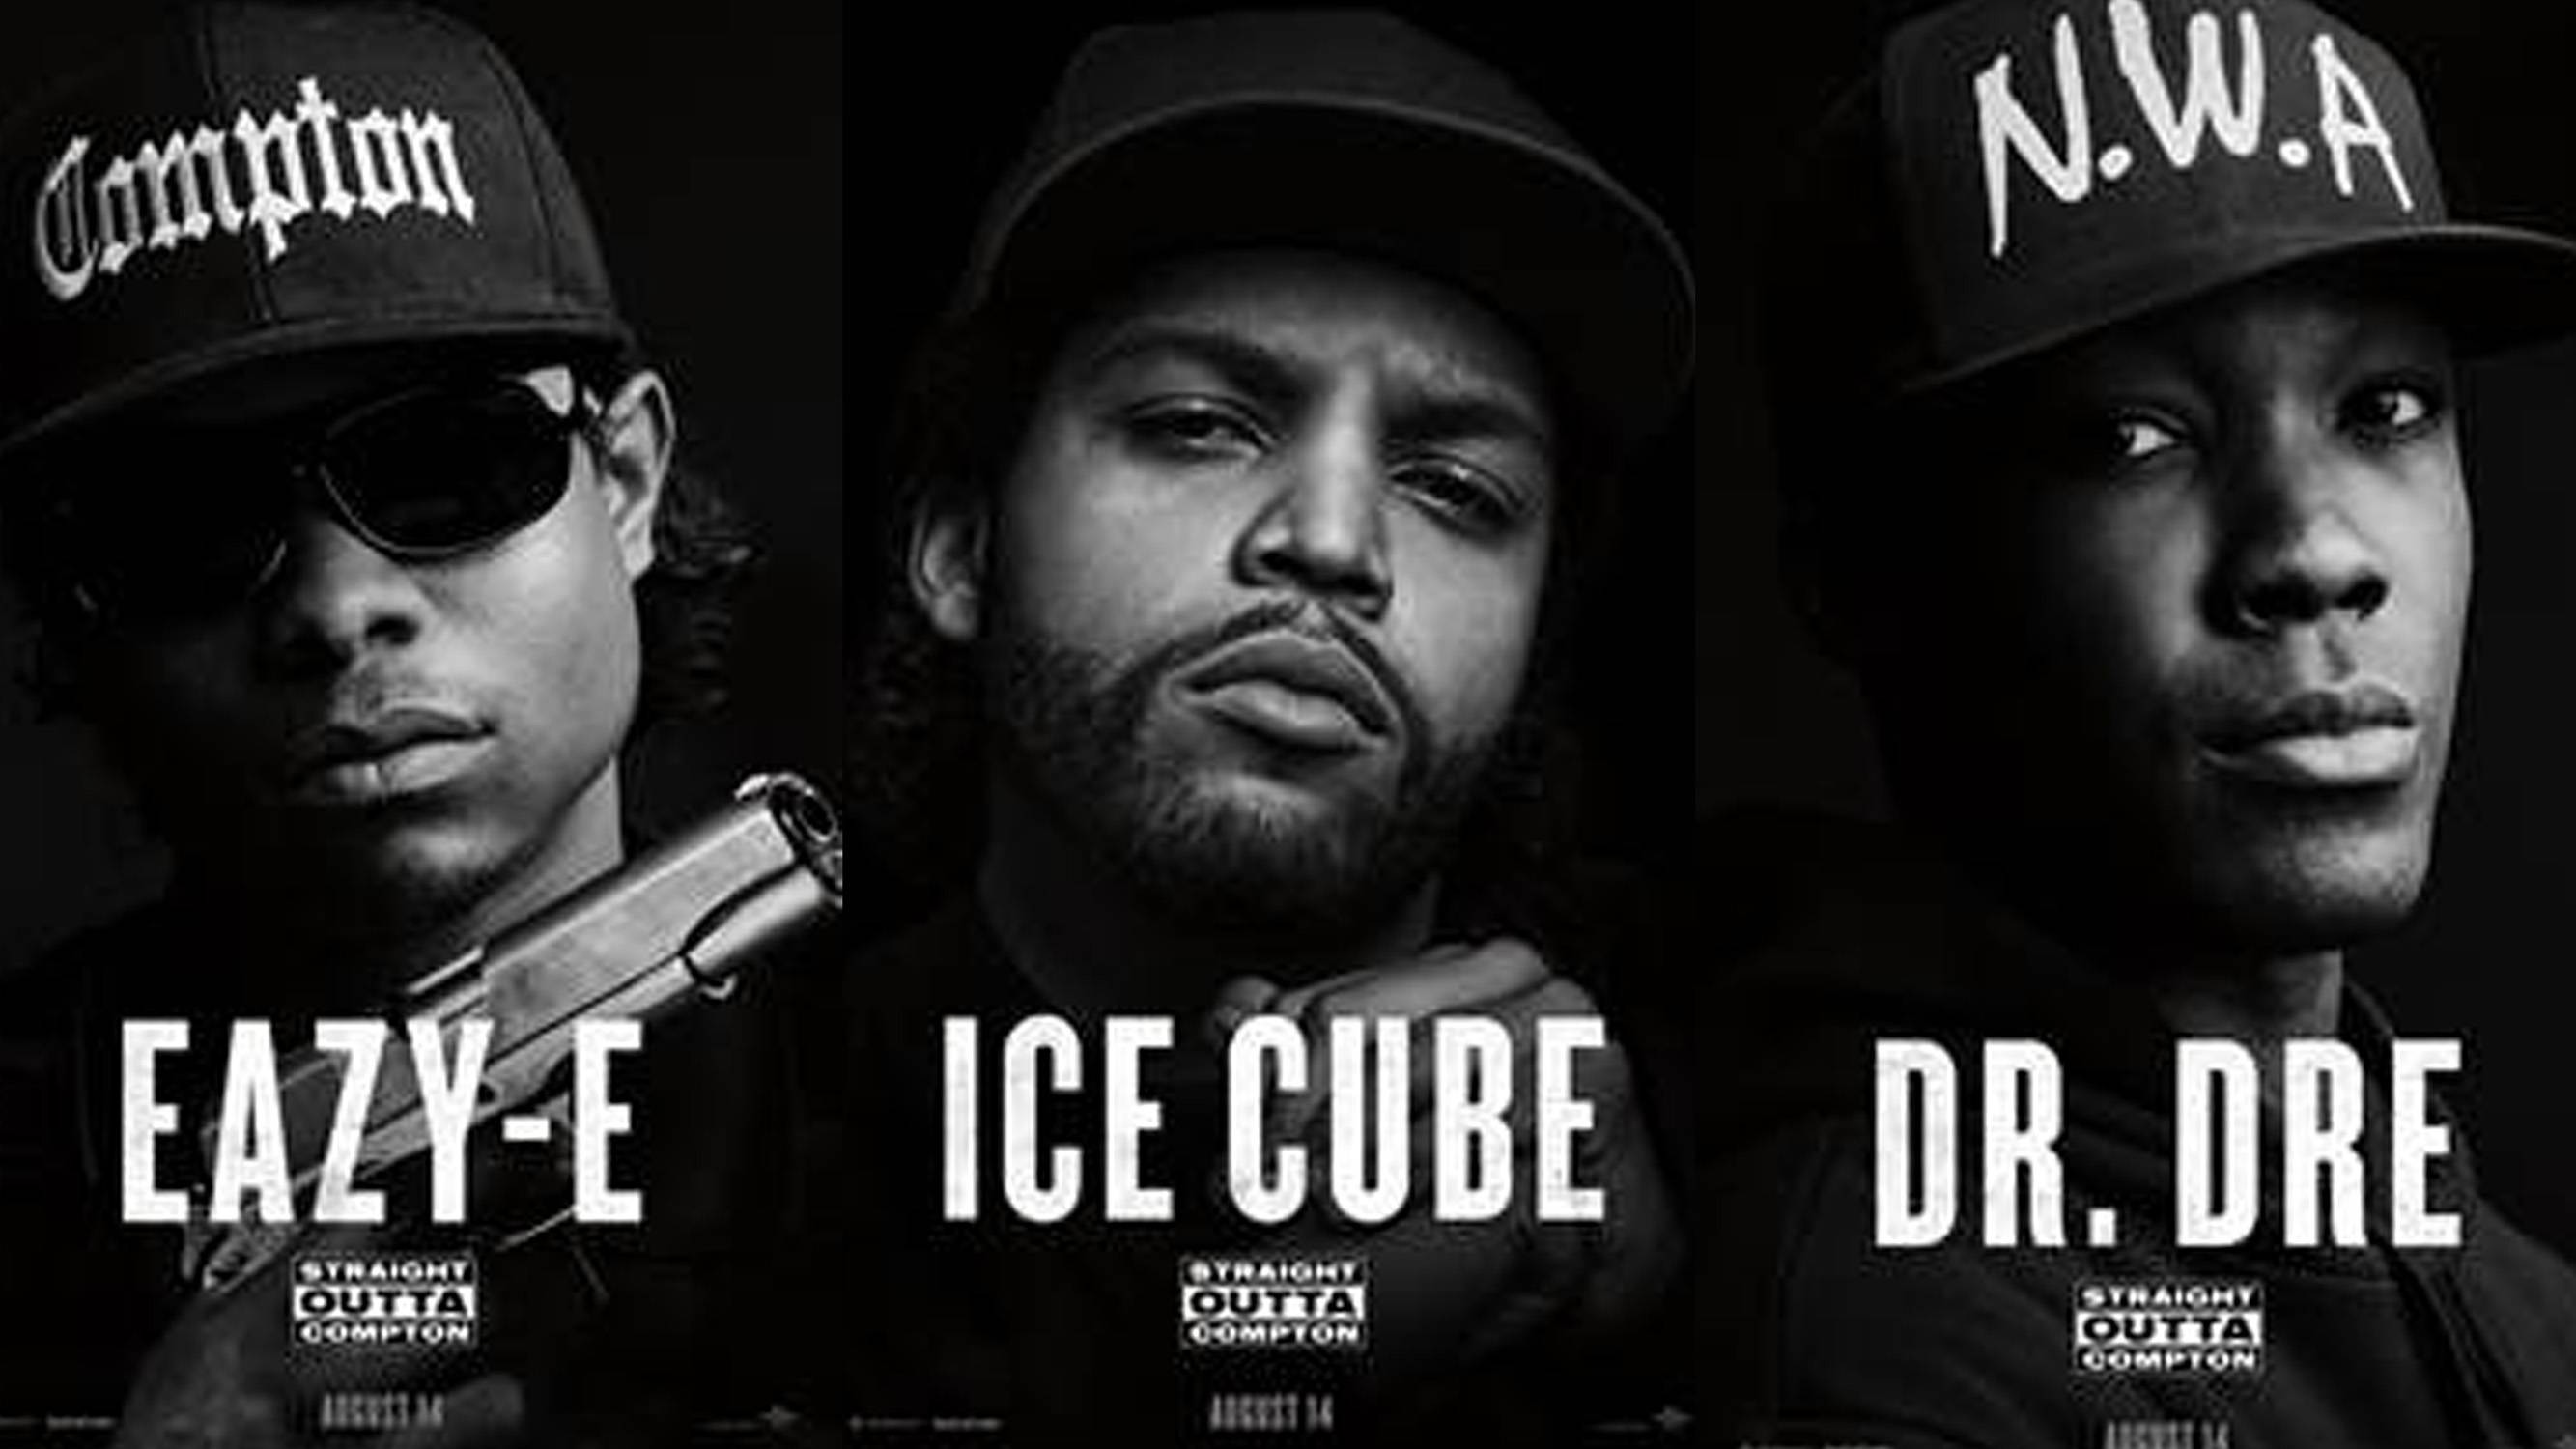 Ice cube мультиплеер. Dr Dre NWA. Ice Cube и Dr Dre. Dr Dre Ice Cube Eazy-e группа. Ice Cube NWA.